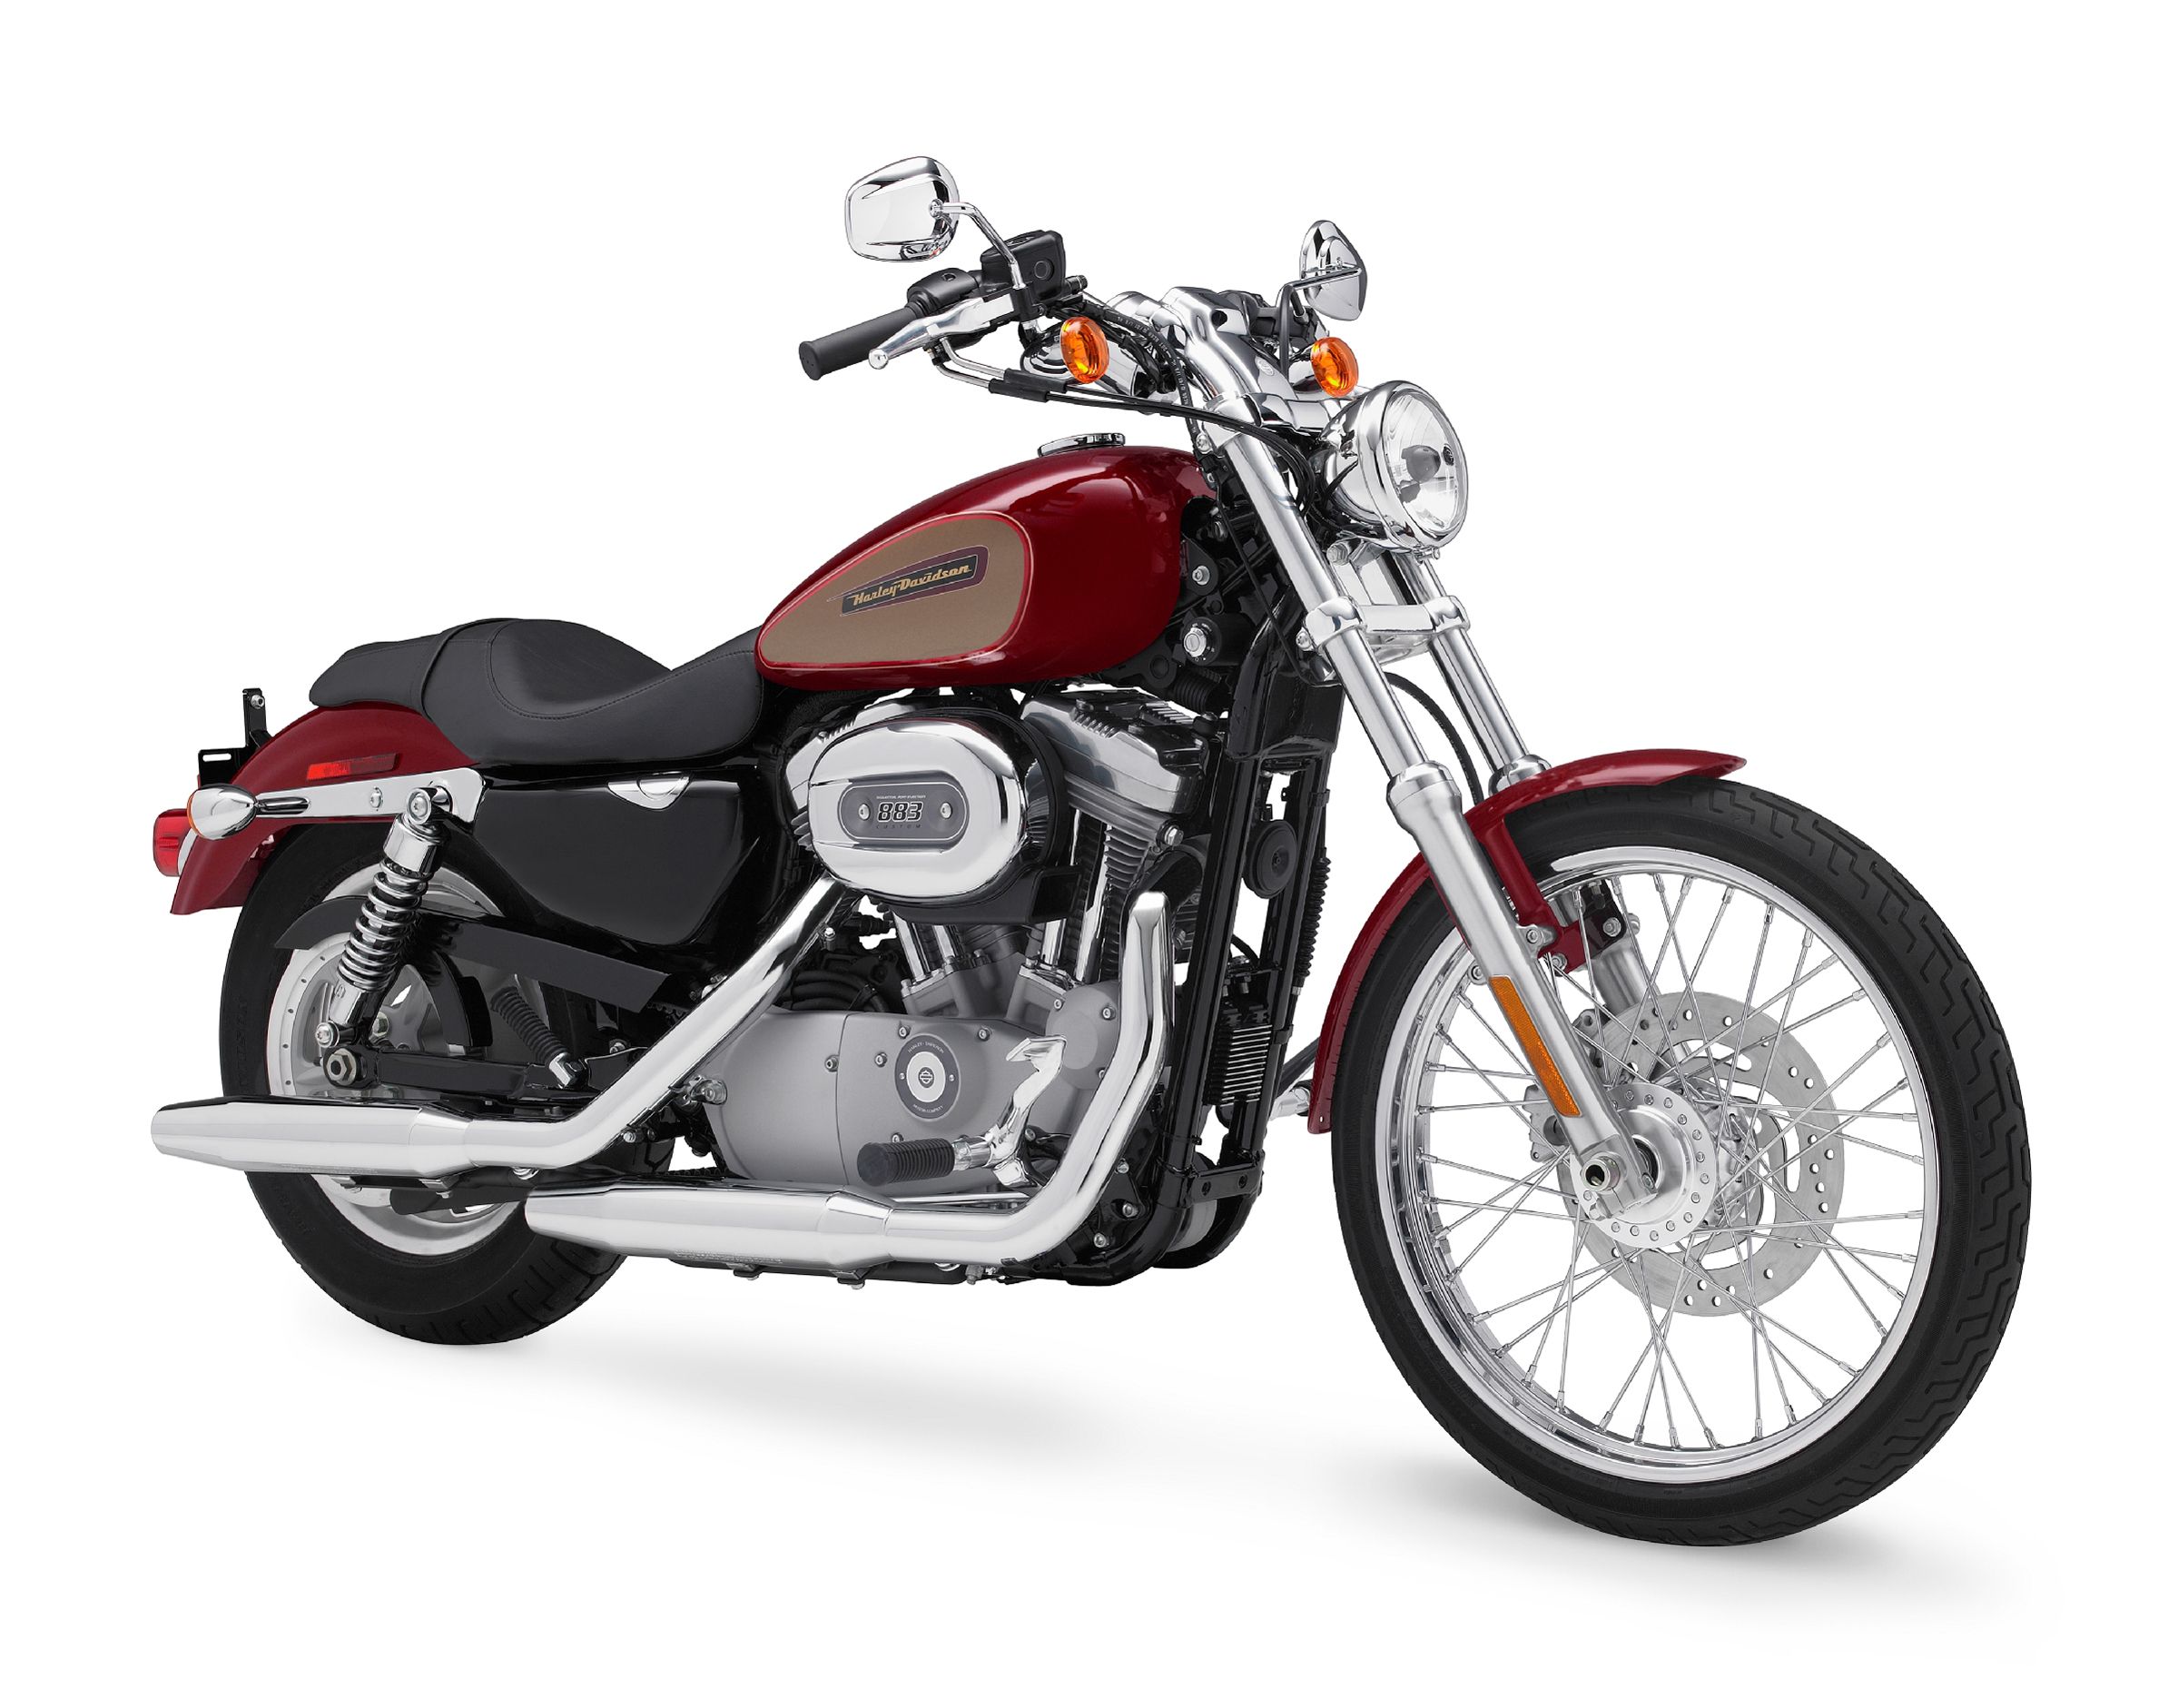  2009 Harley-Davidson Sportster 883 Custom